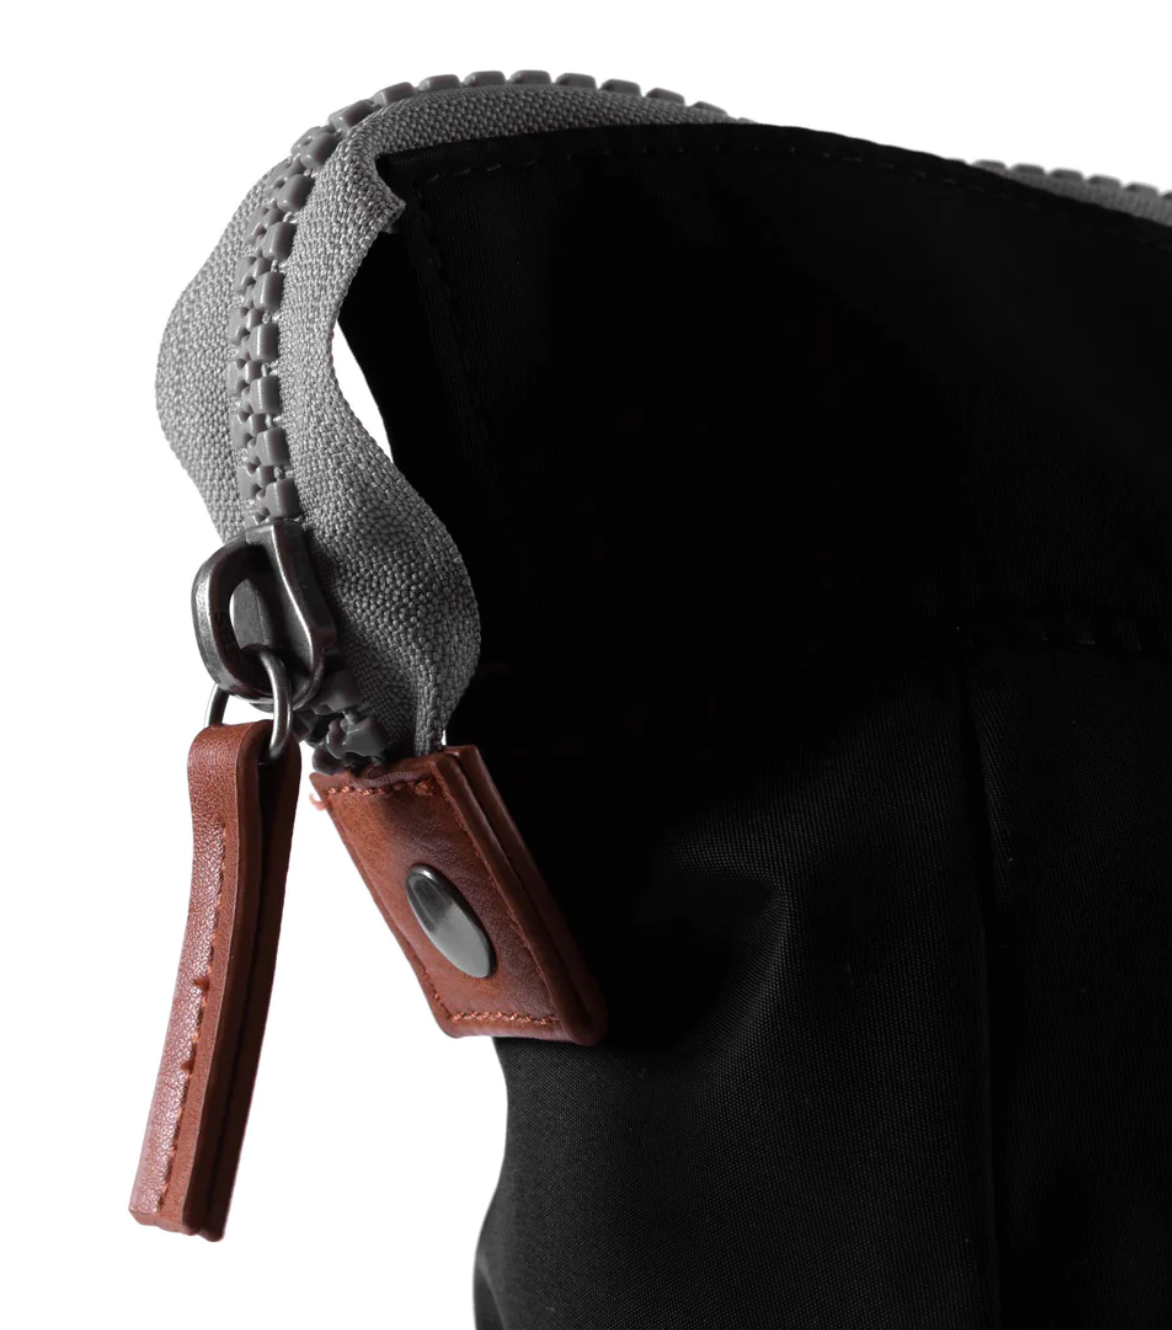 ORI Bantry B Sustainable Nylon Backpack – Small – Black